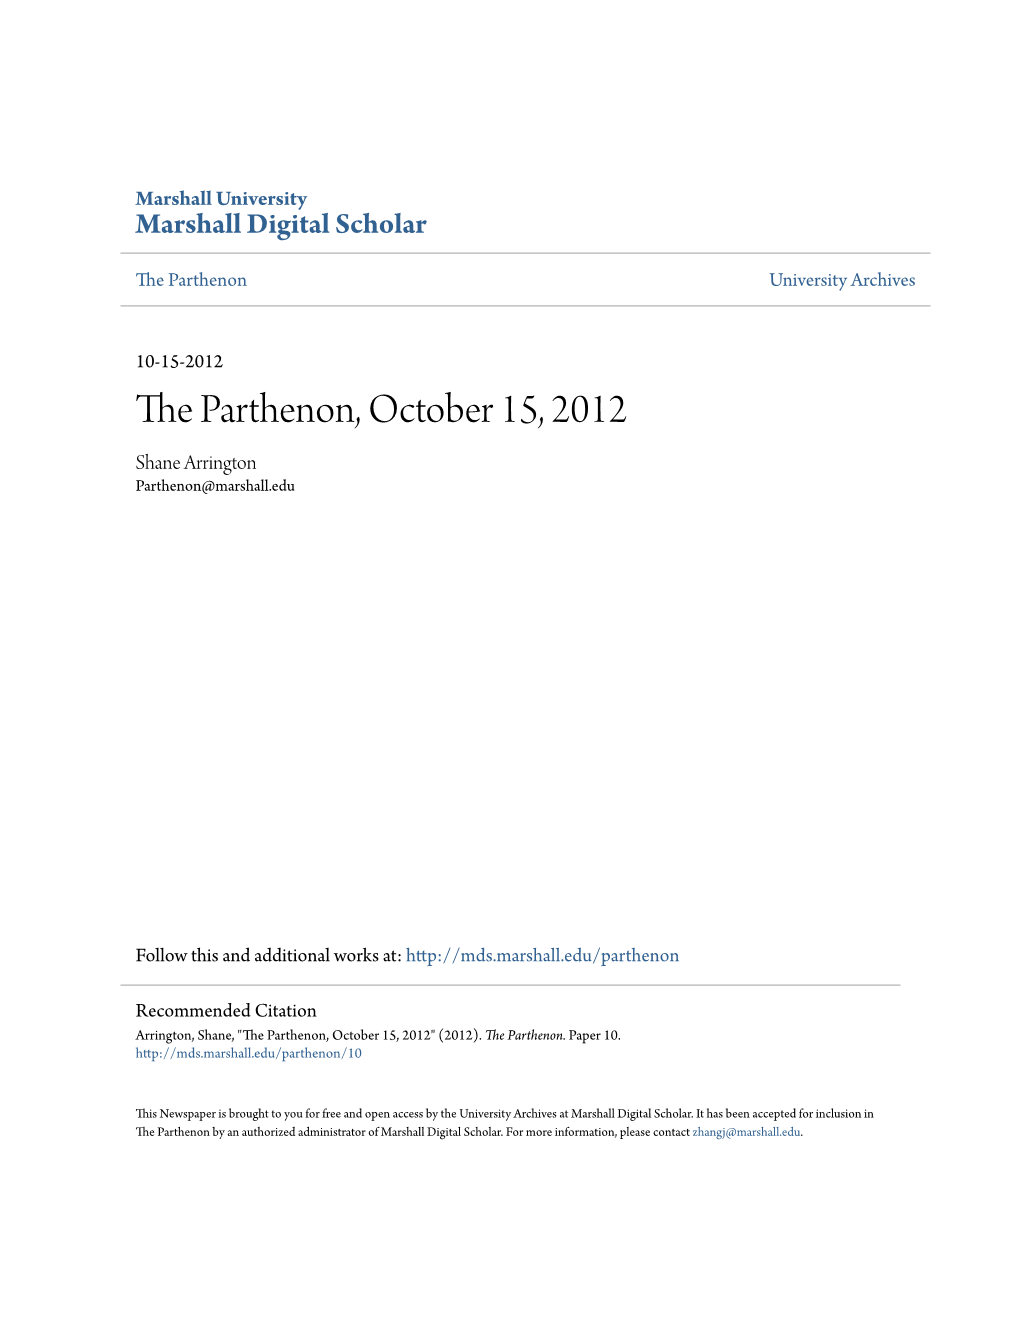 The Parthenon, October 15, 2012